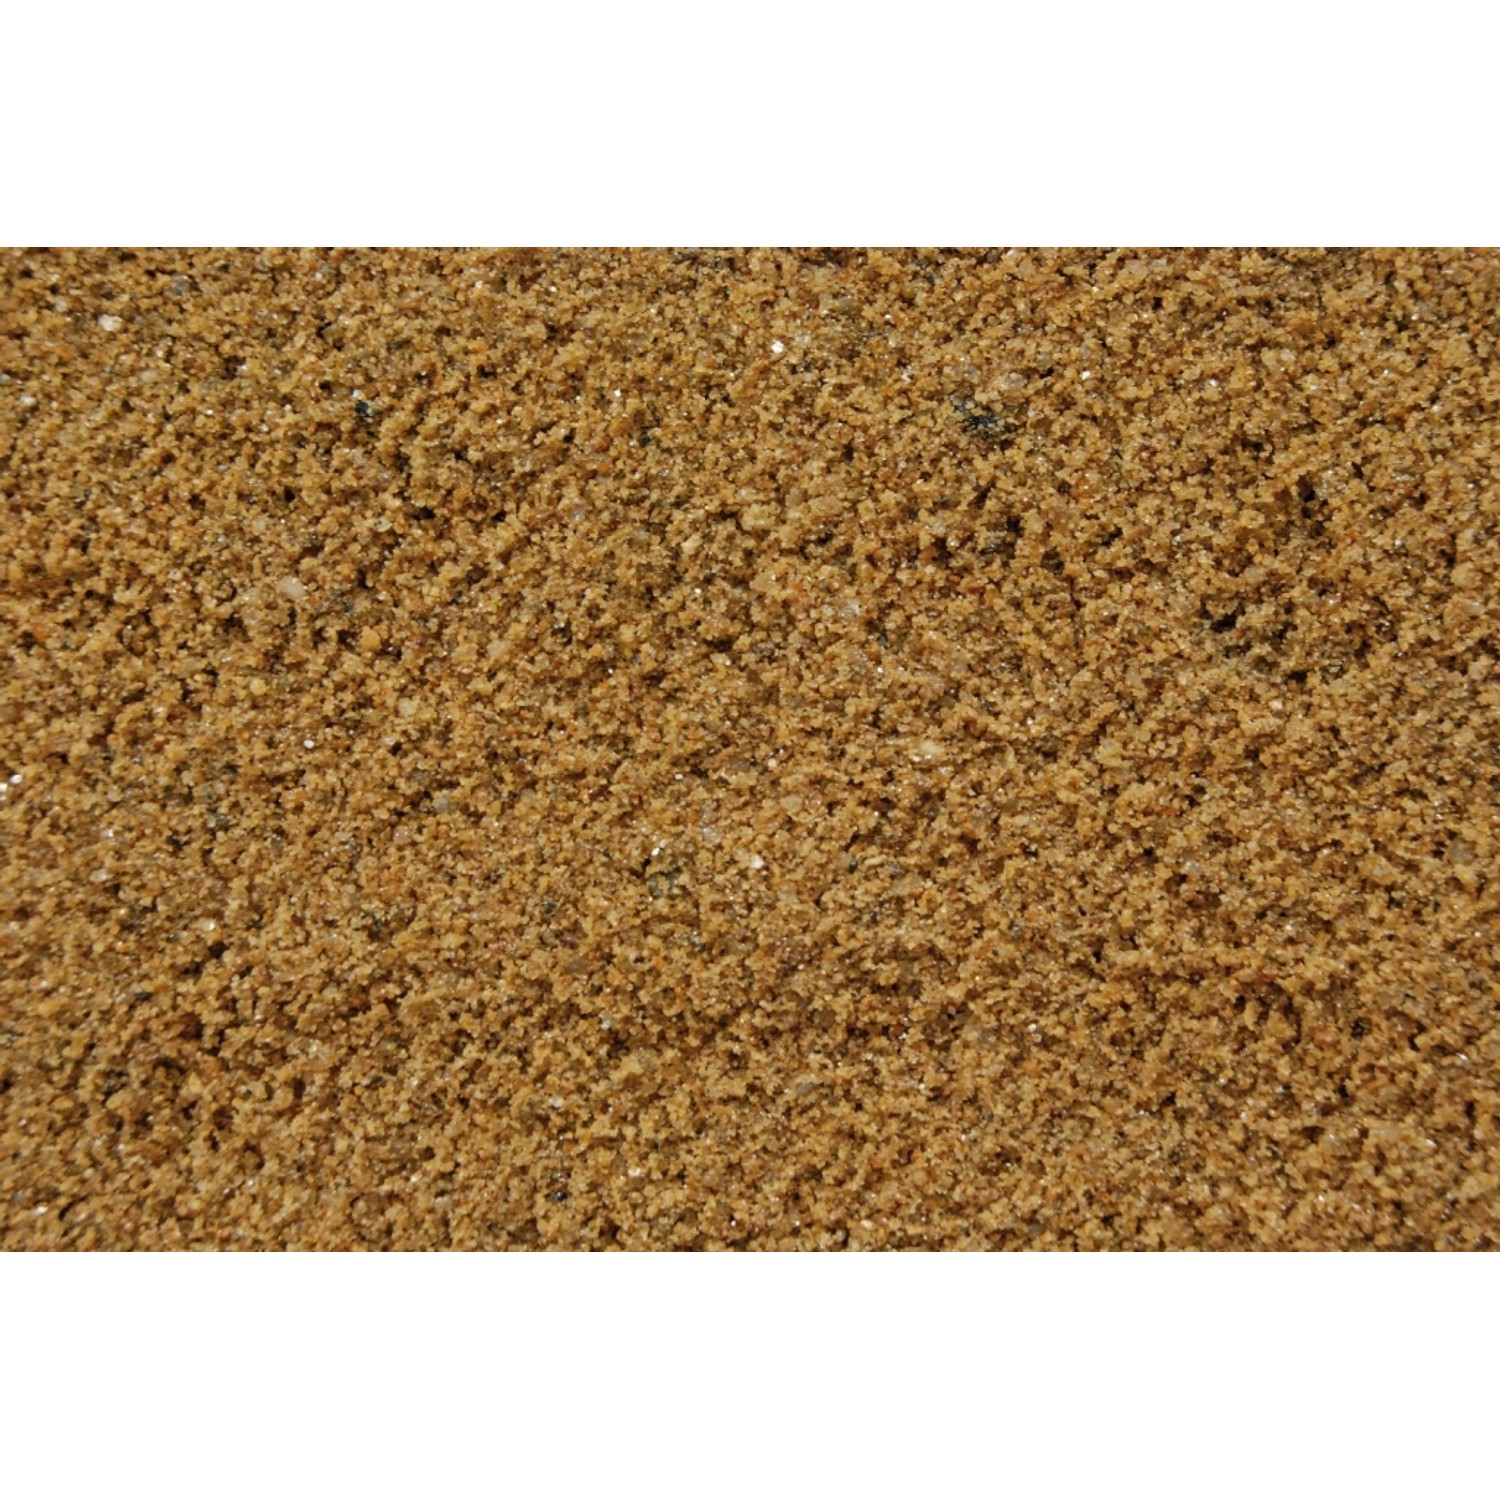 Spielsand Gold-Braun 0,06 - 1 mm 1000 kg Big-Bag